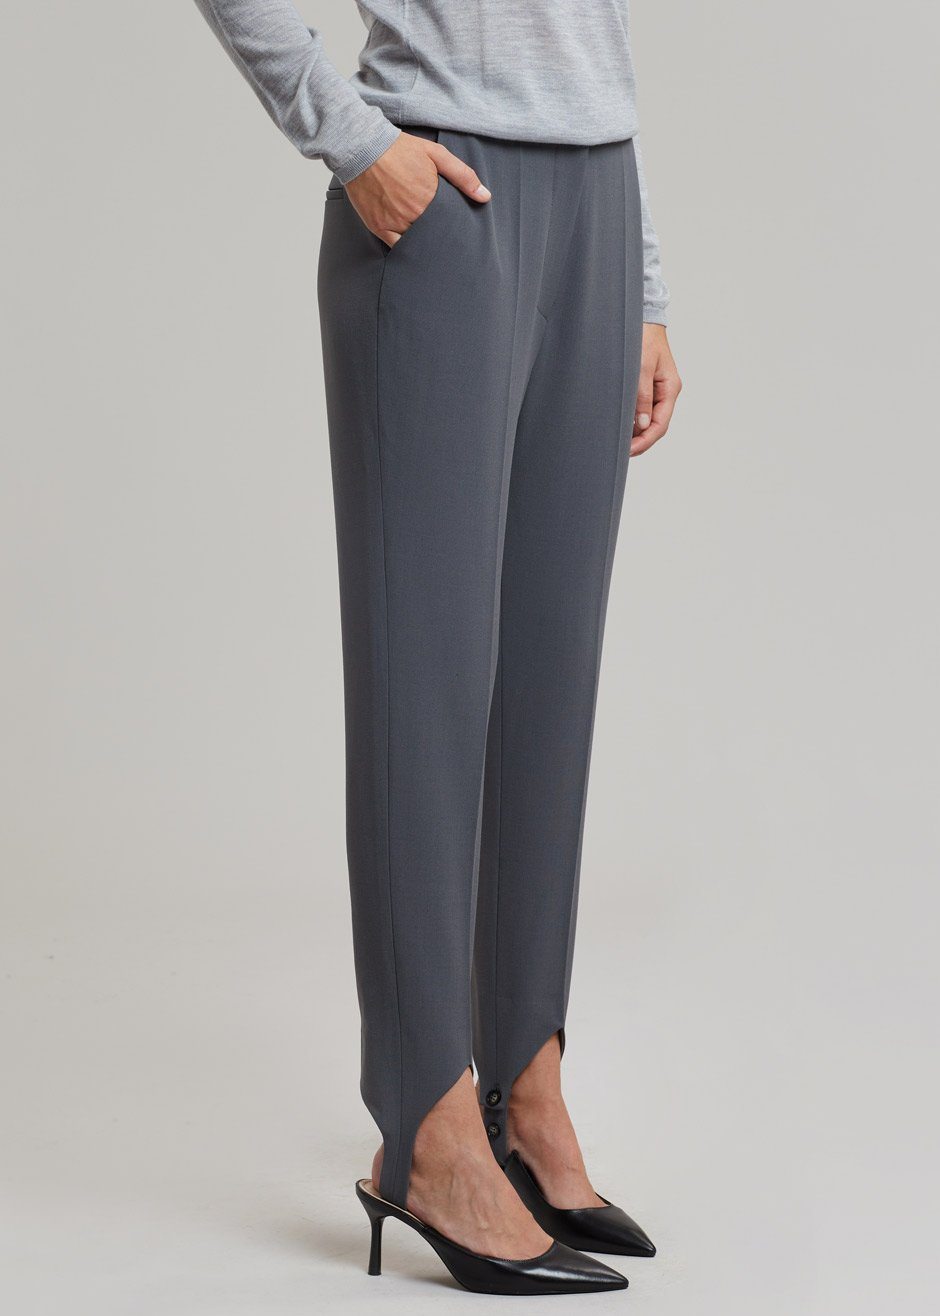 Nanushka Darby Stirrup Suit Pants - Grey - 3